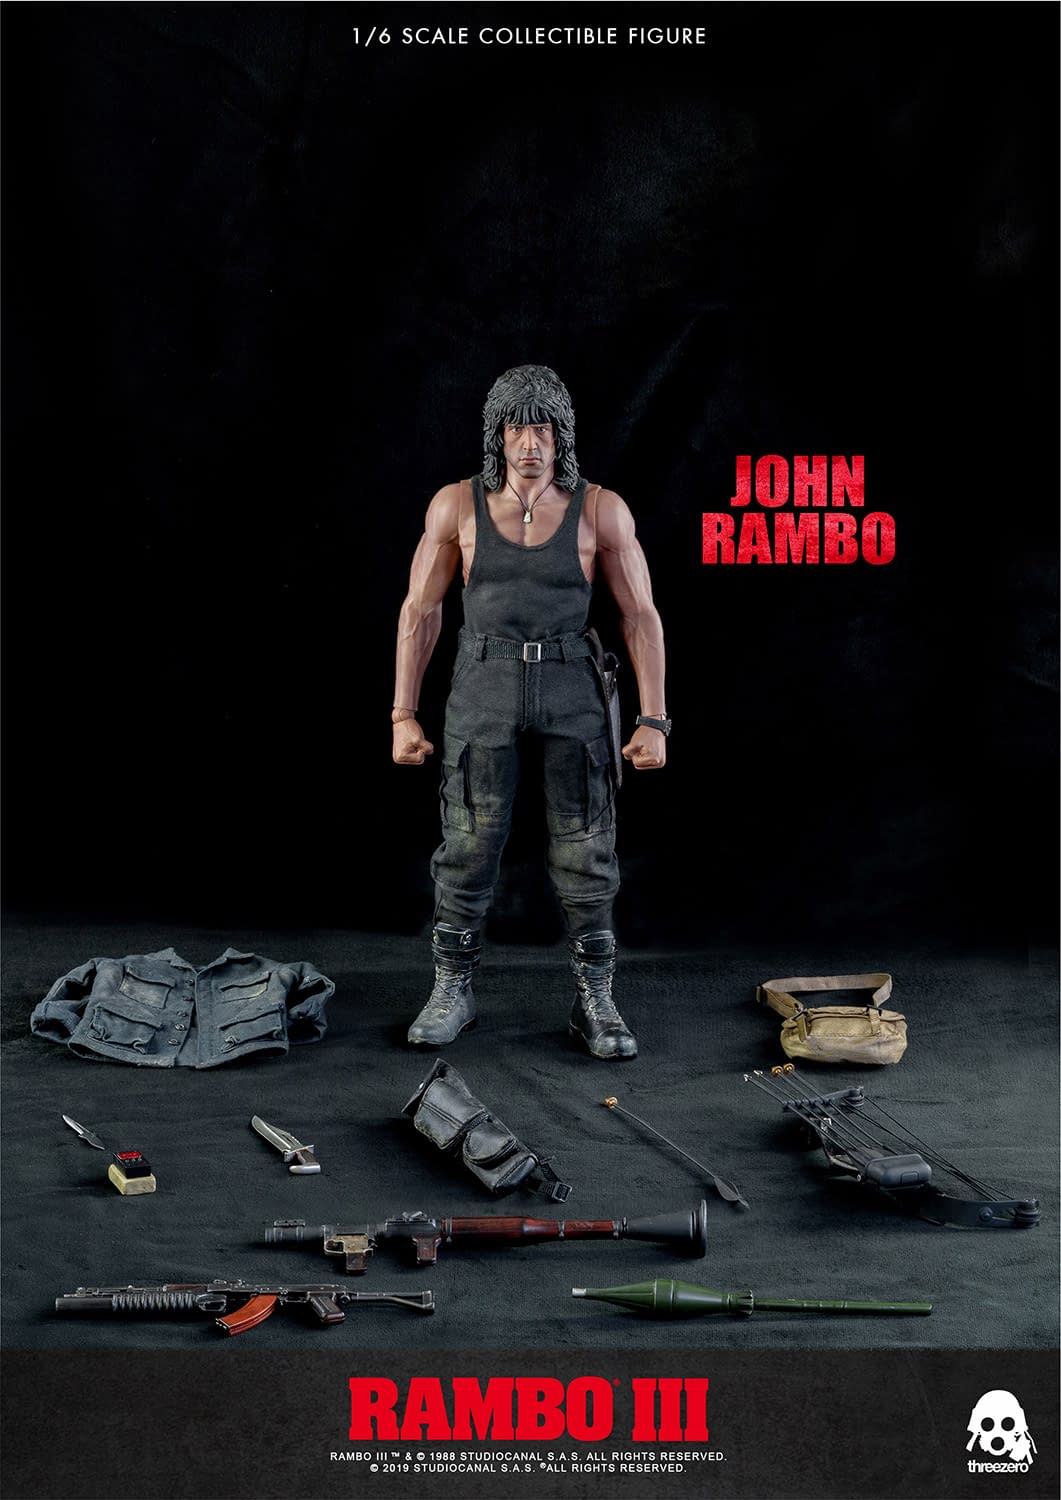 Rambo III Makes Its Mark with New 1/6 Scale Figure from Threezero